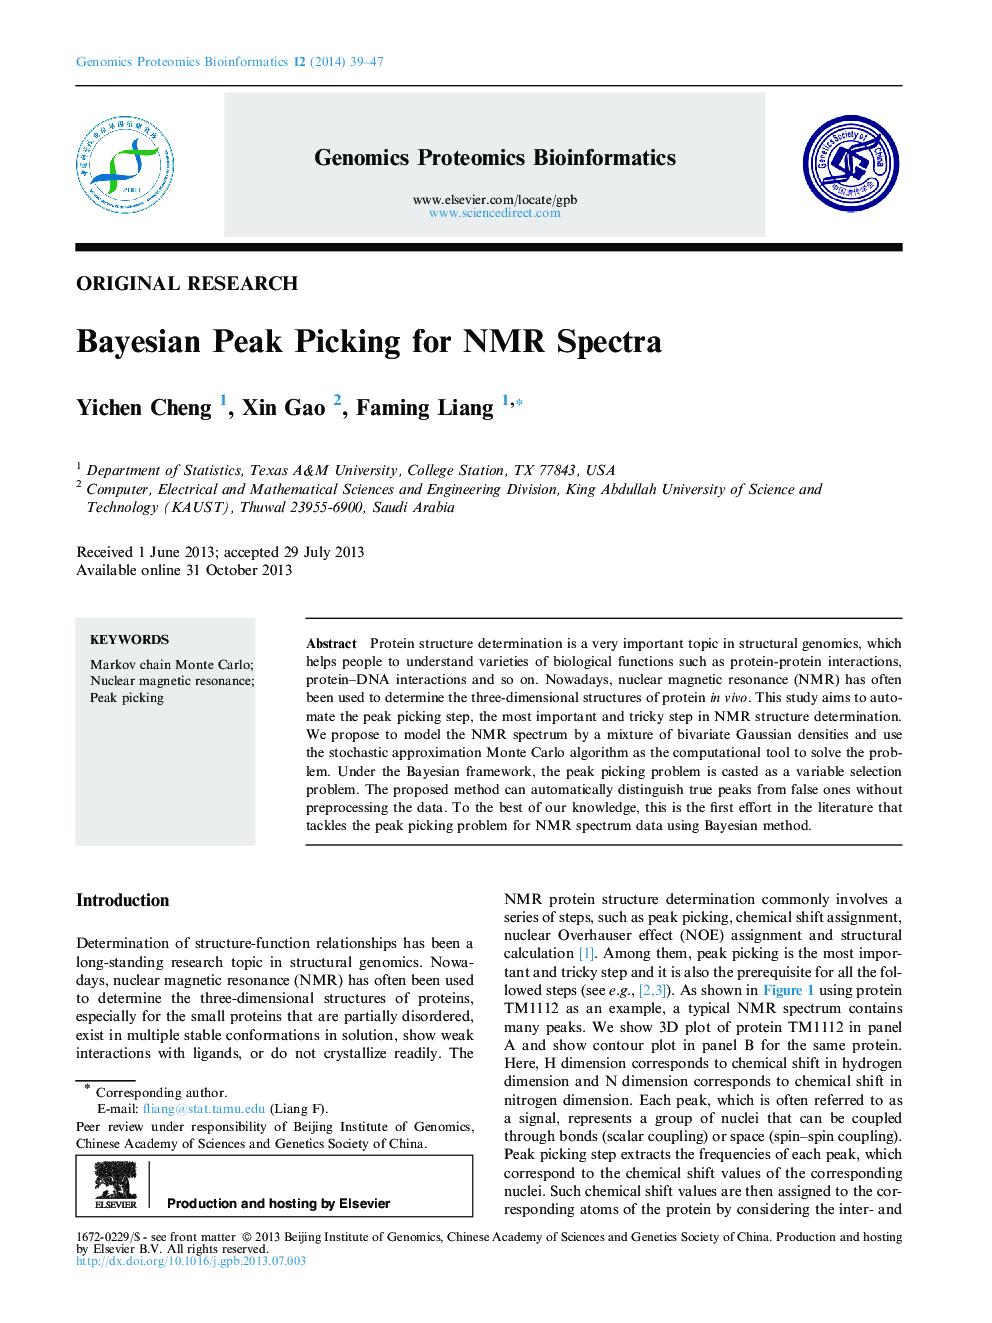 Bayesian Peak Picking for NMR Spectra 